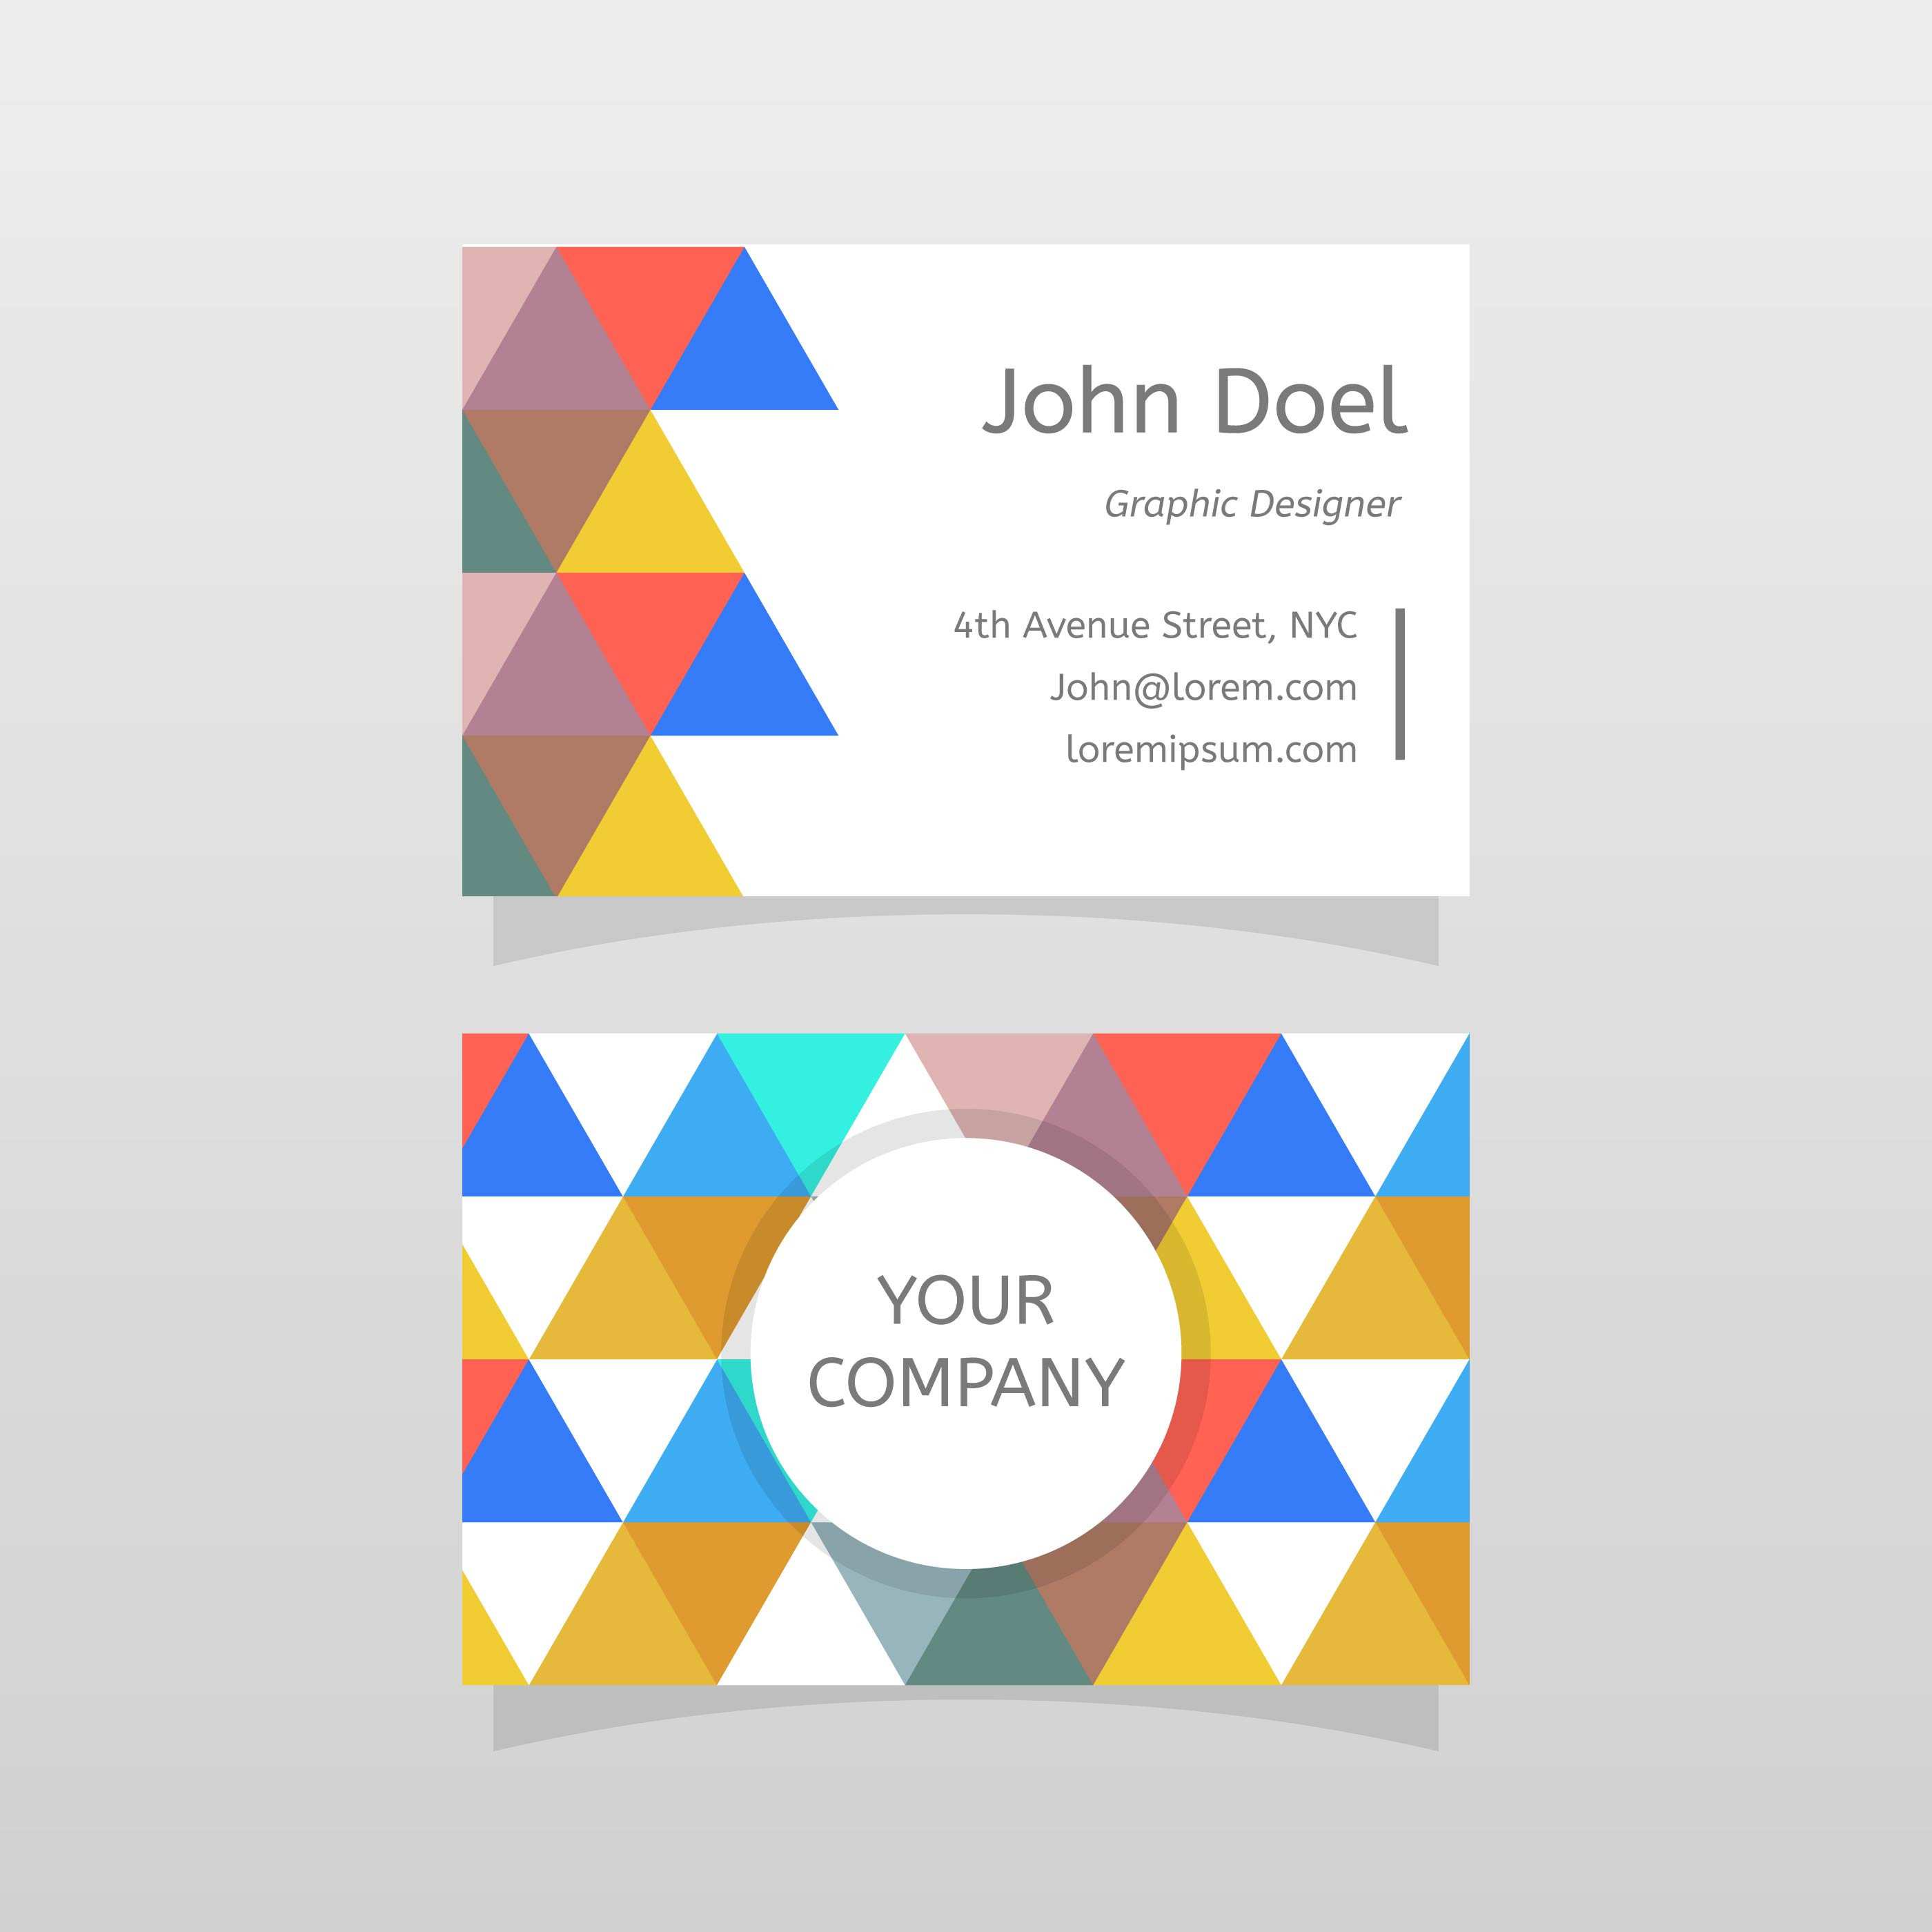 vistaprint business card template download illustrator